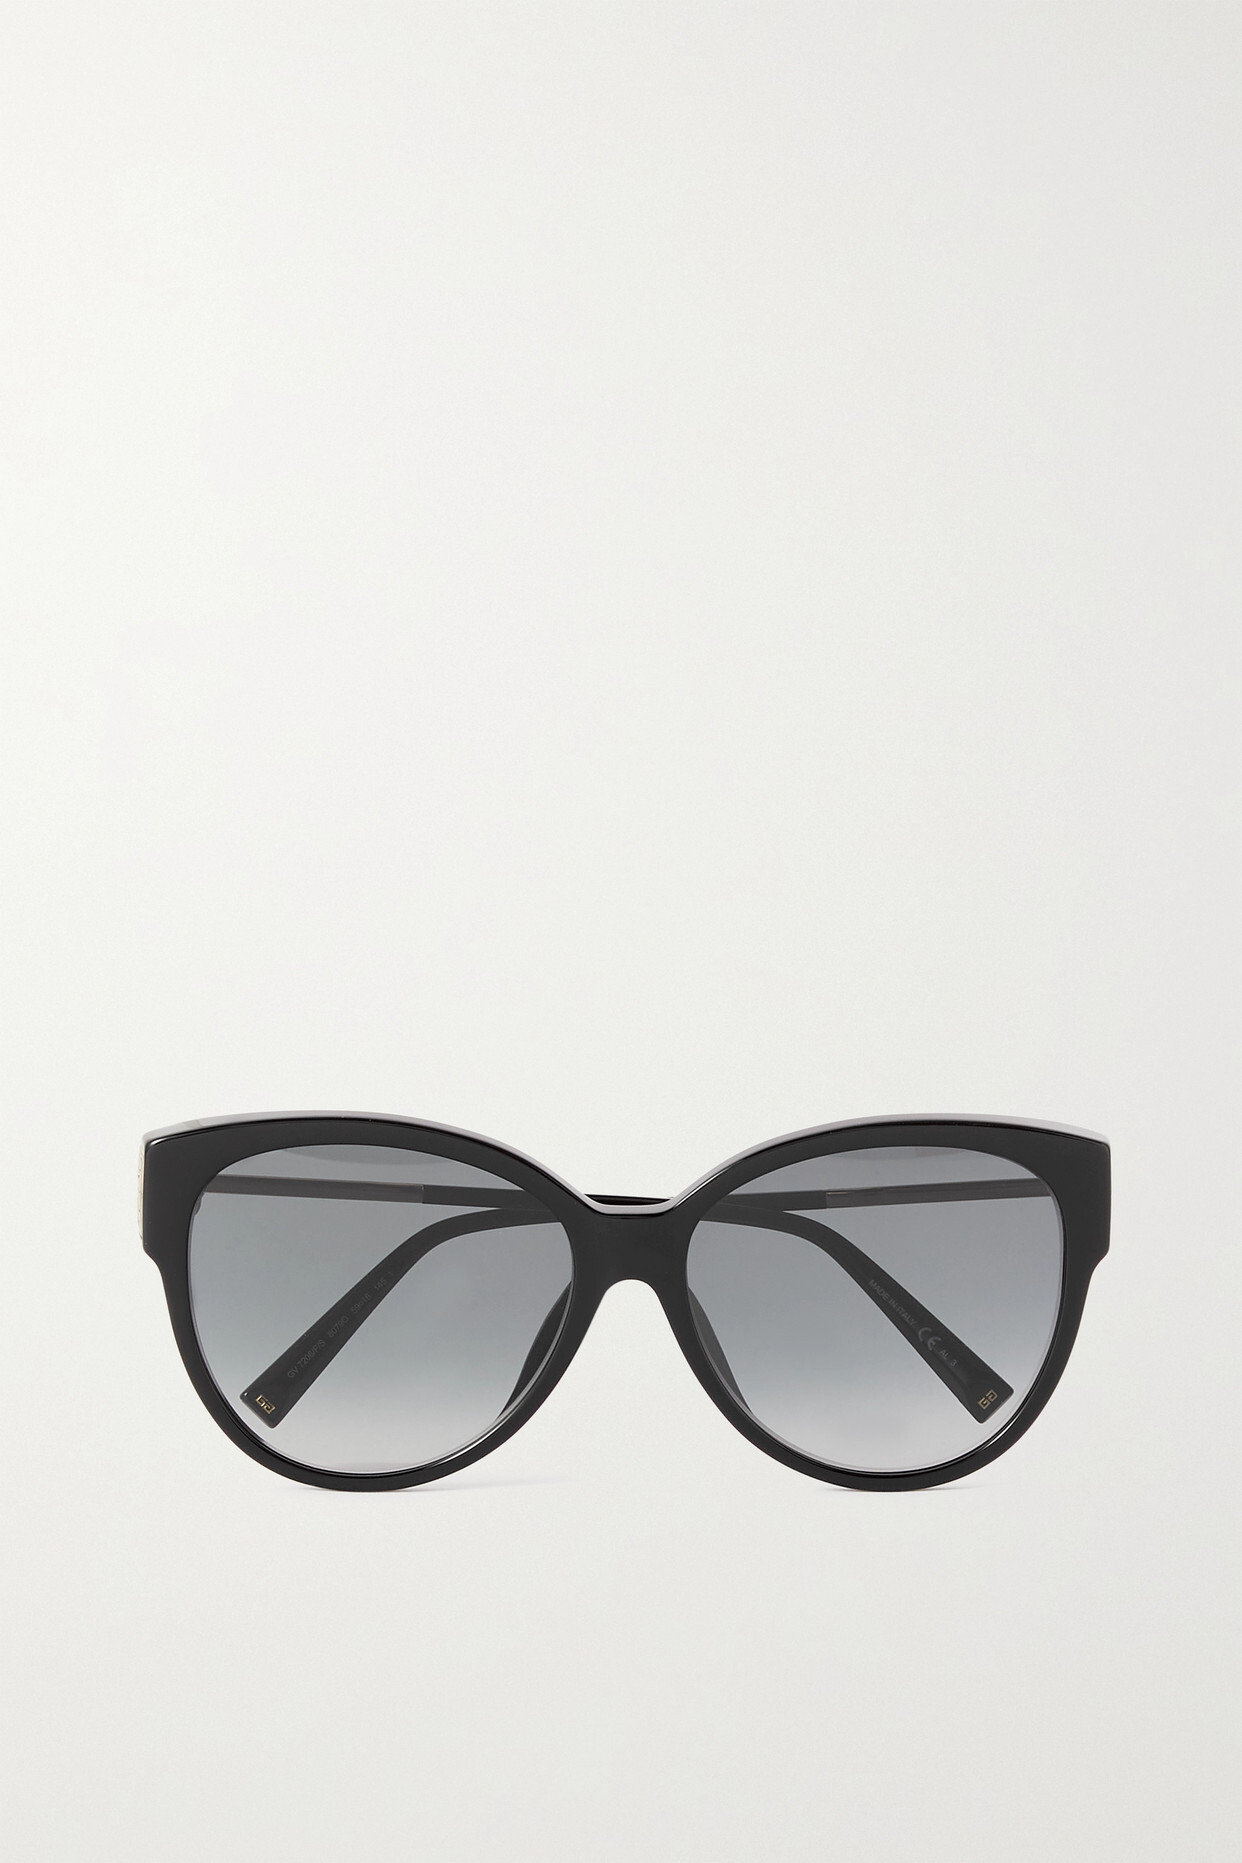 Givenchy - Oversized Cat-eye Acetate And Gold-tone Sunglasses - Black